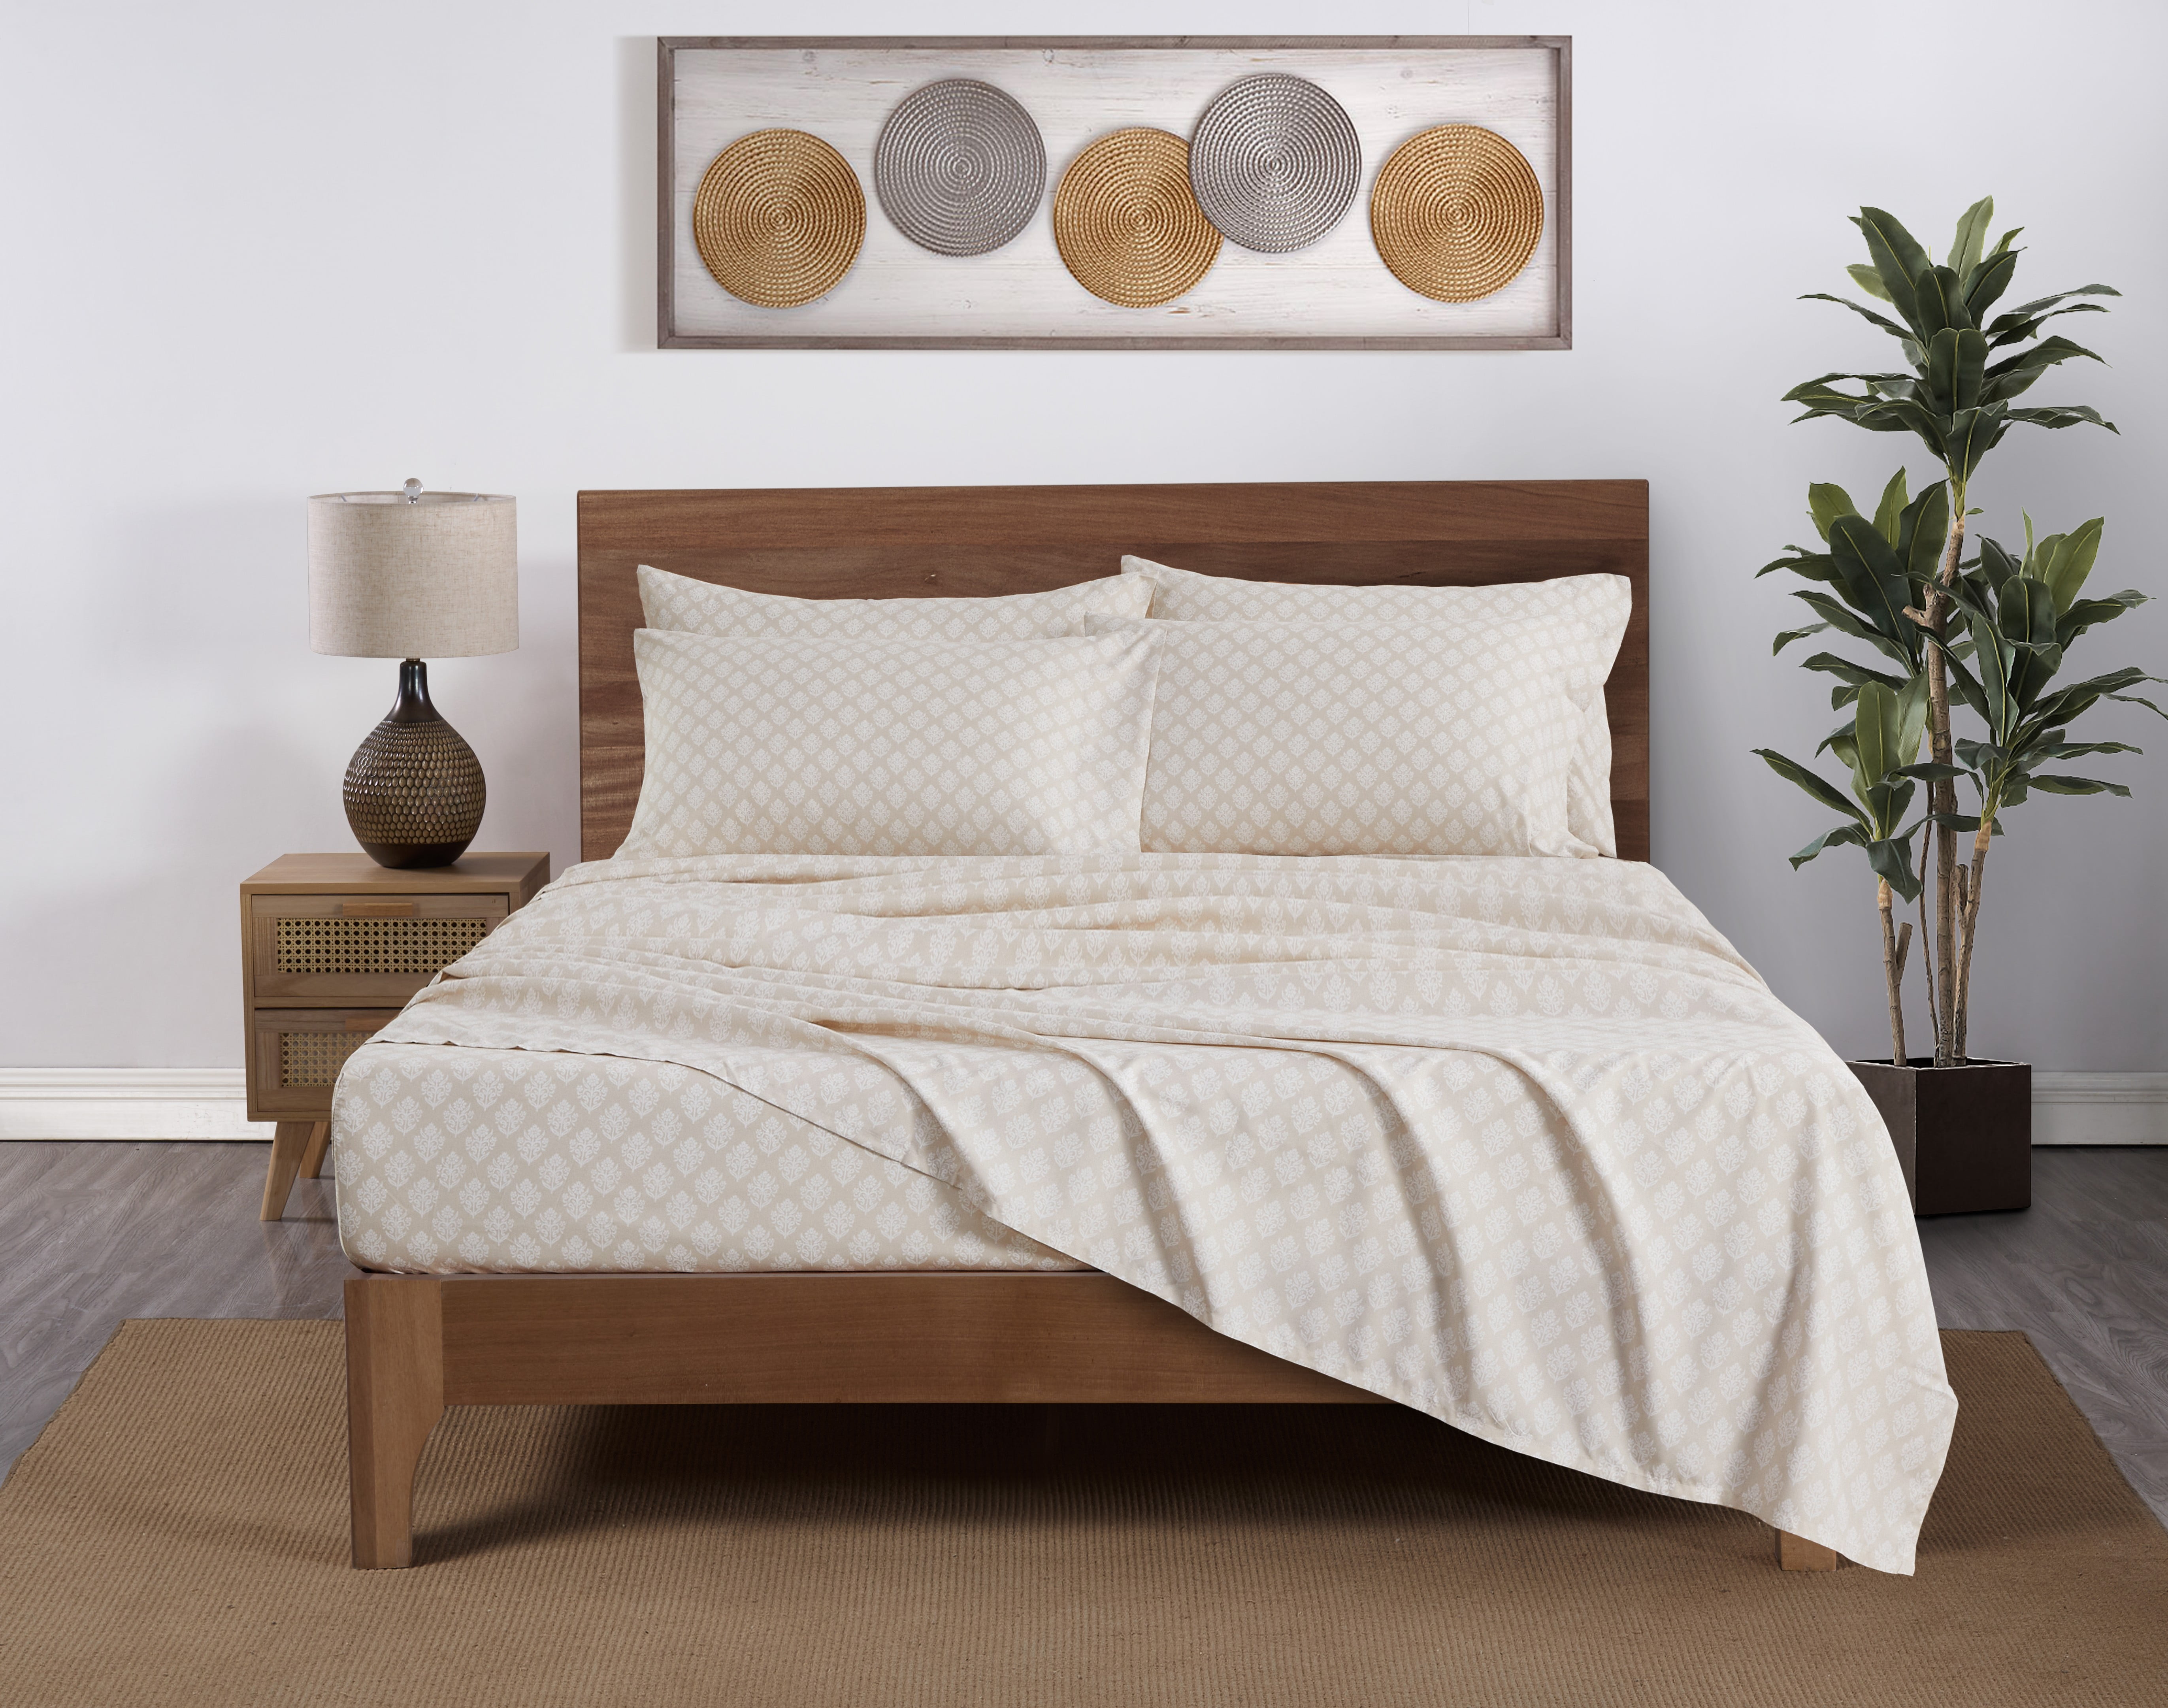 12 Bulk Lavana Soft Brushed Microplush Bed Sheet Set Full Size Assorted  Color